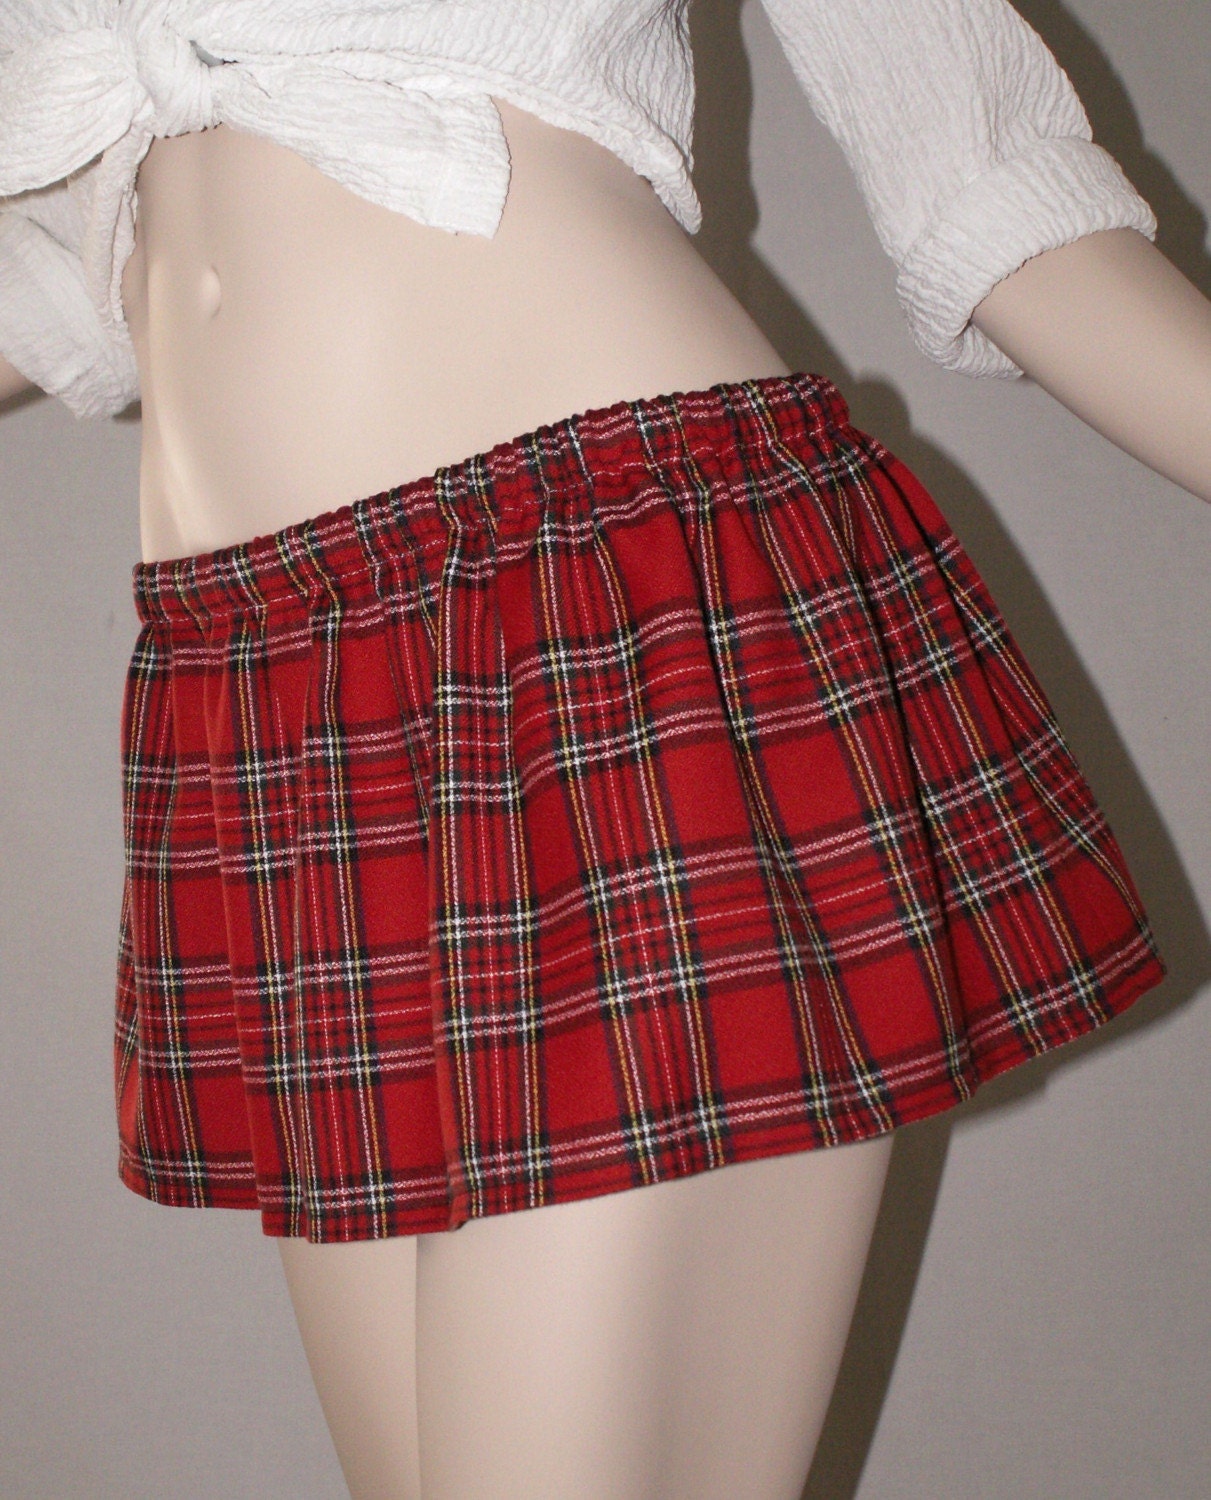 Naughty SCHOOLGIRL Red PLAID Mini Skirt PLUS by dontchajustluvit